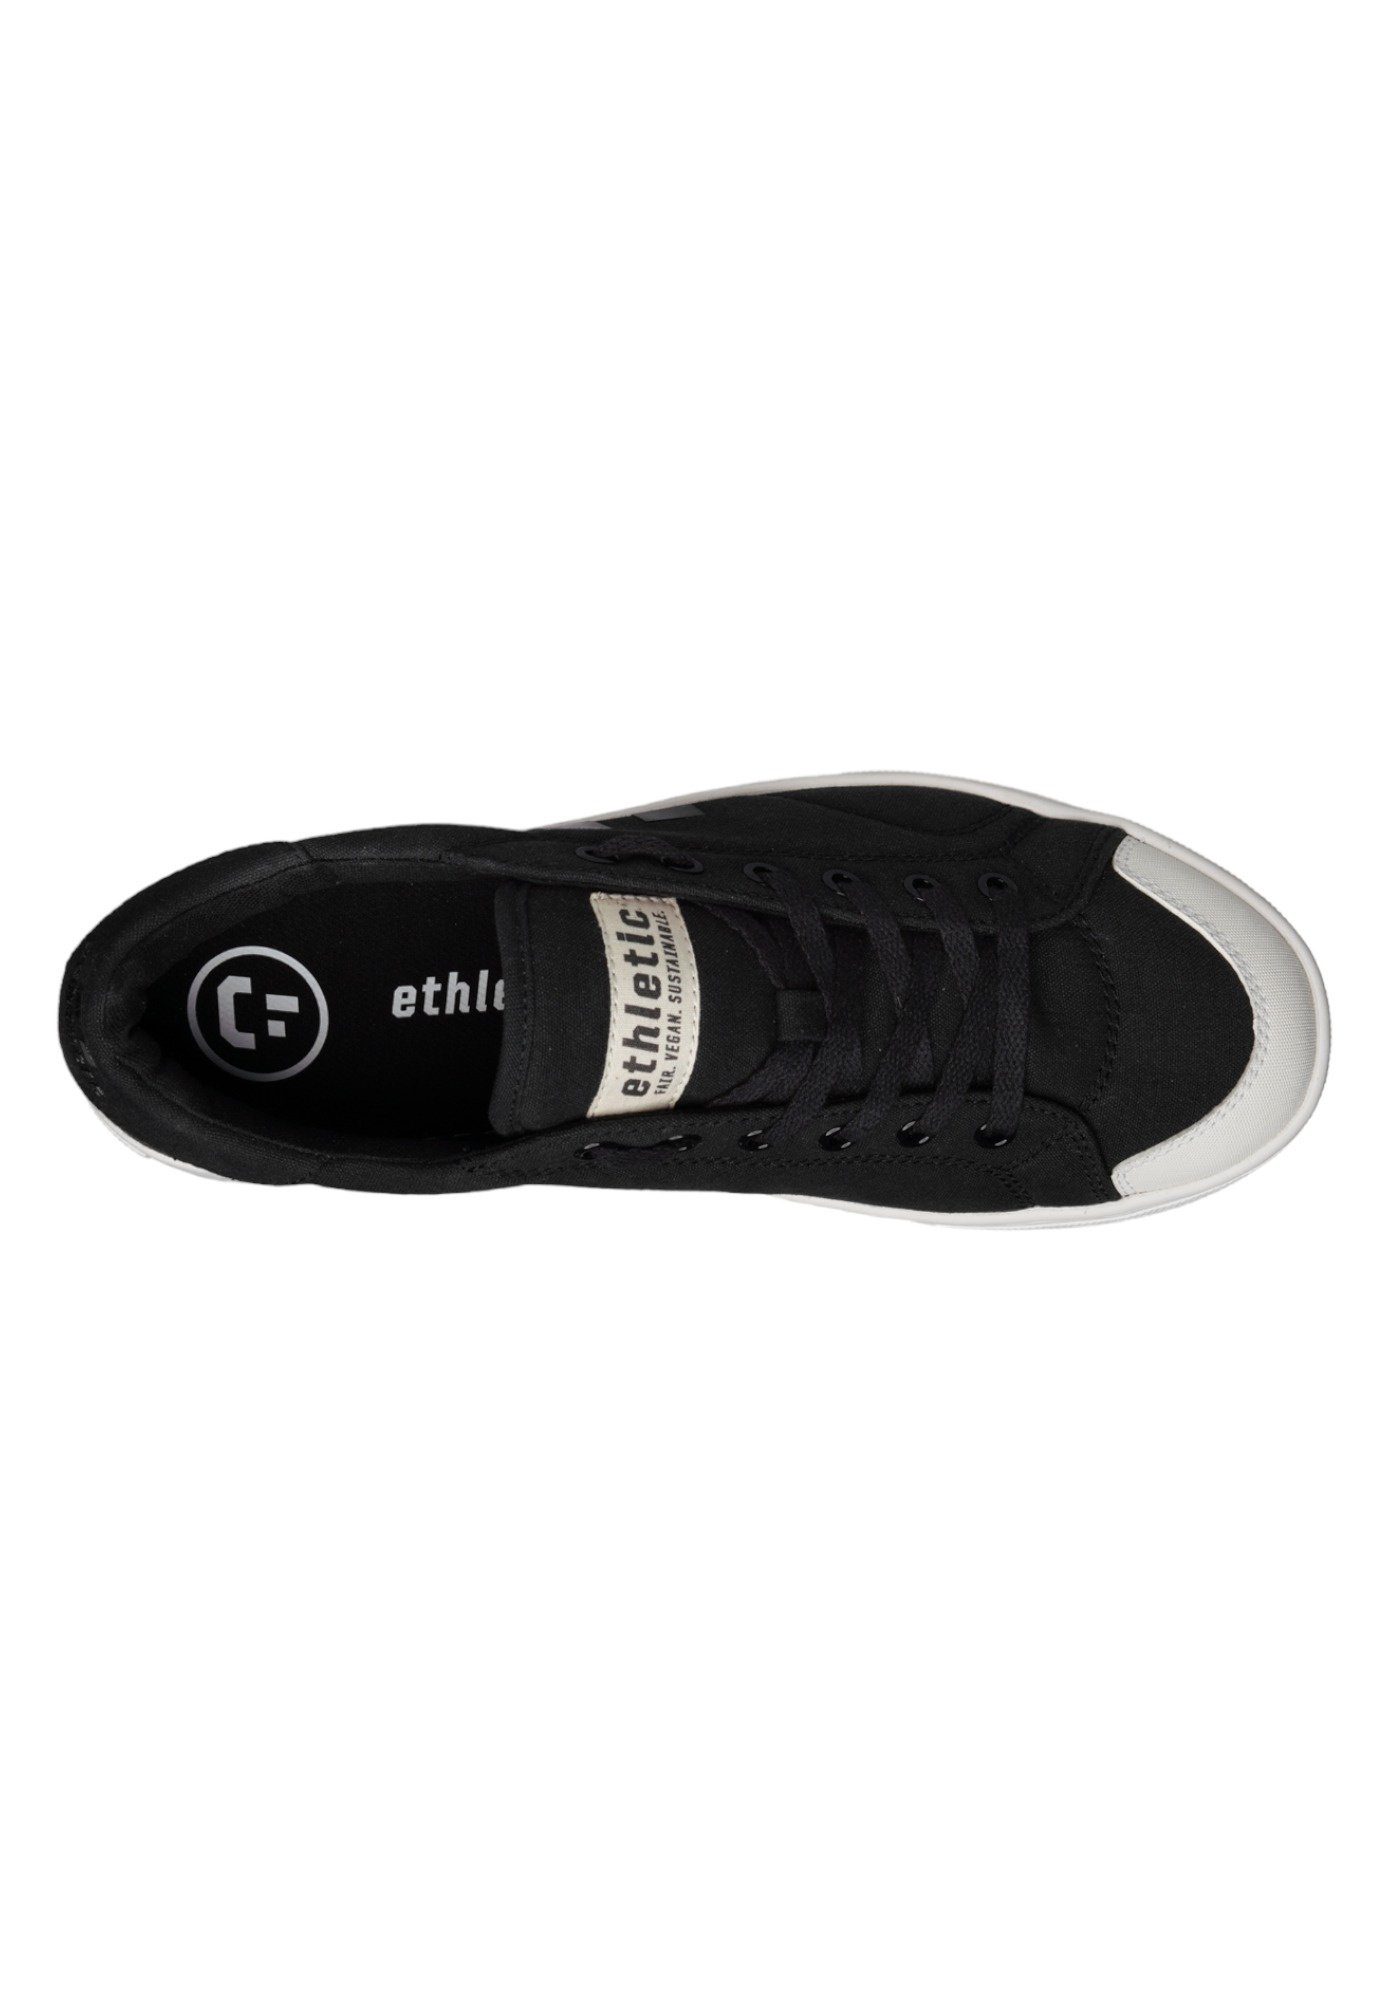 Jet Cut - Fairtrade ETHLETIC Produkt Sneaker Black Active Lo Black Jet